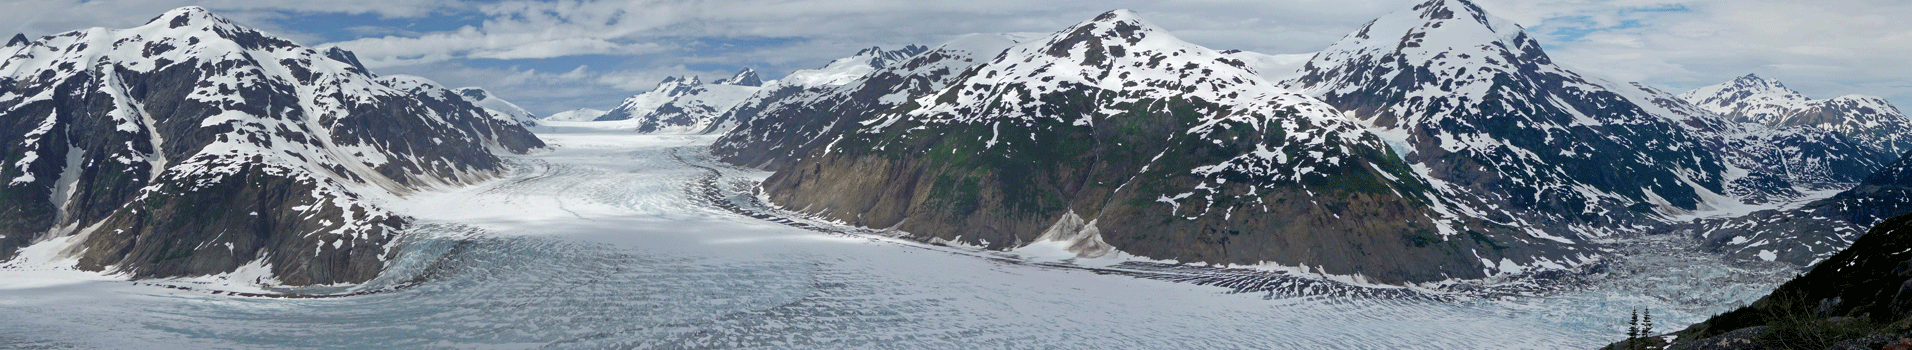 Panorama view of Salmon Glacier BC